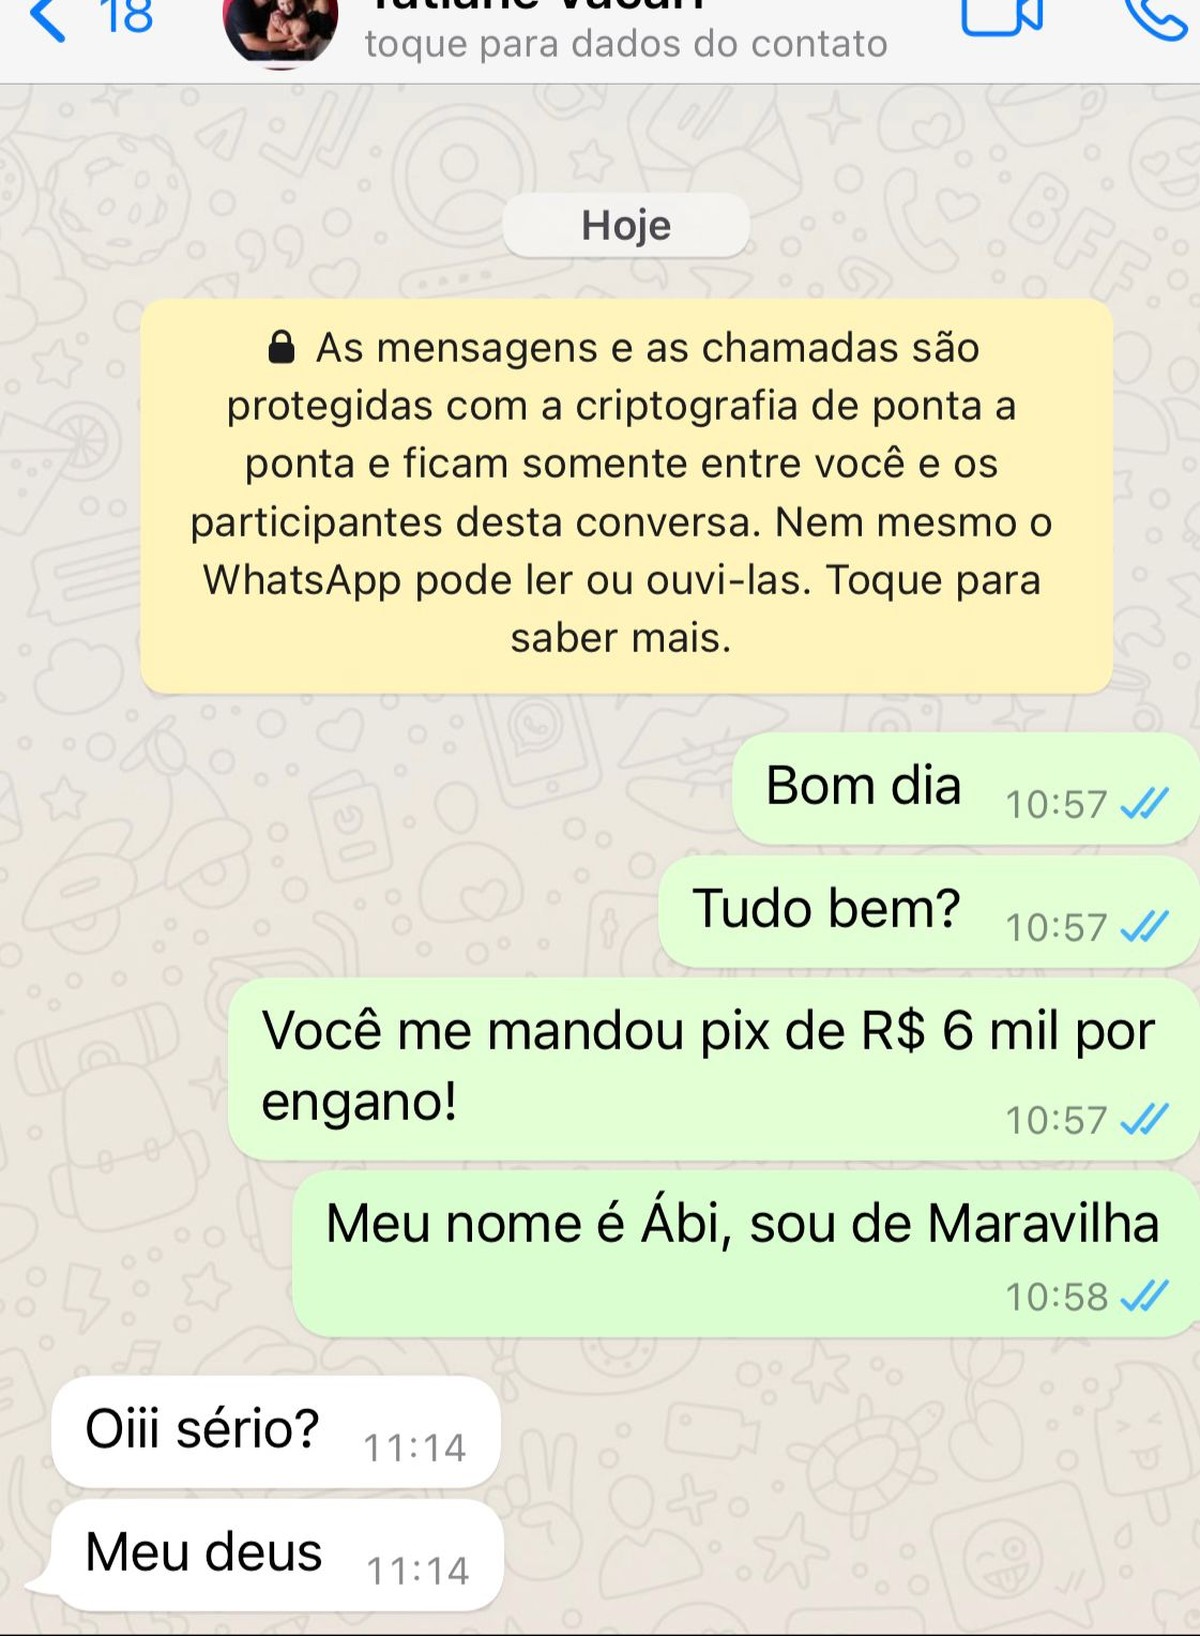 Jornalista de SC recebe Pix de R$ 6 mil por engano, busca o pagador e  devolve quantia: 'É o justo' | Santa Catarina | G1